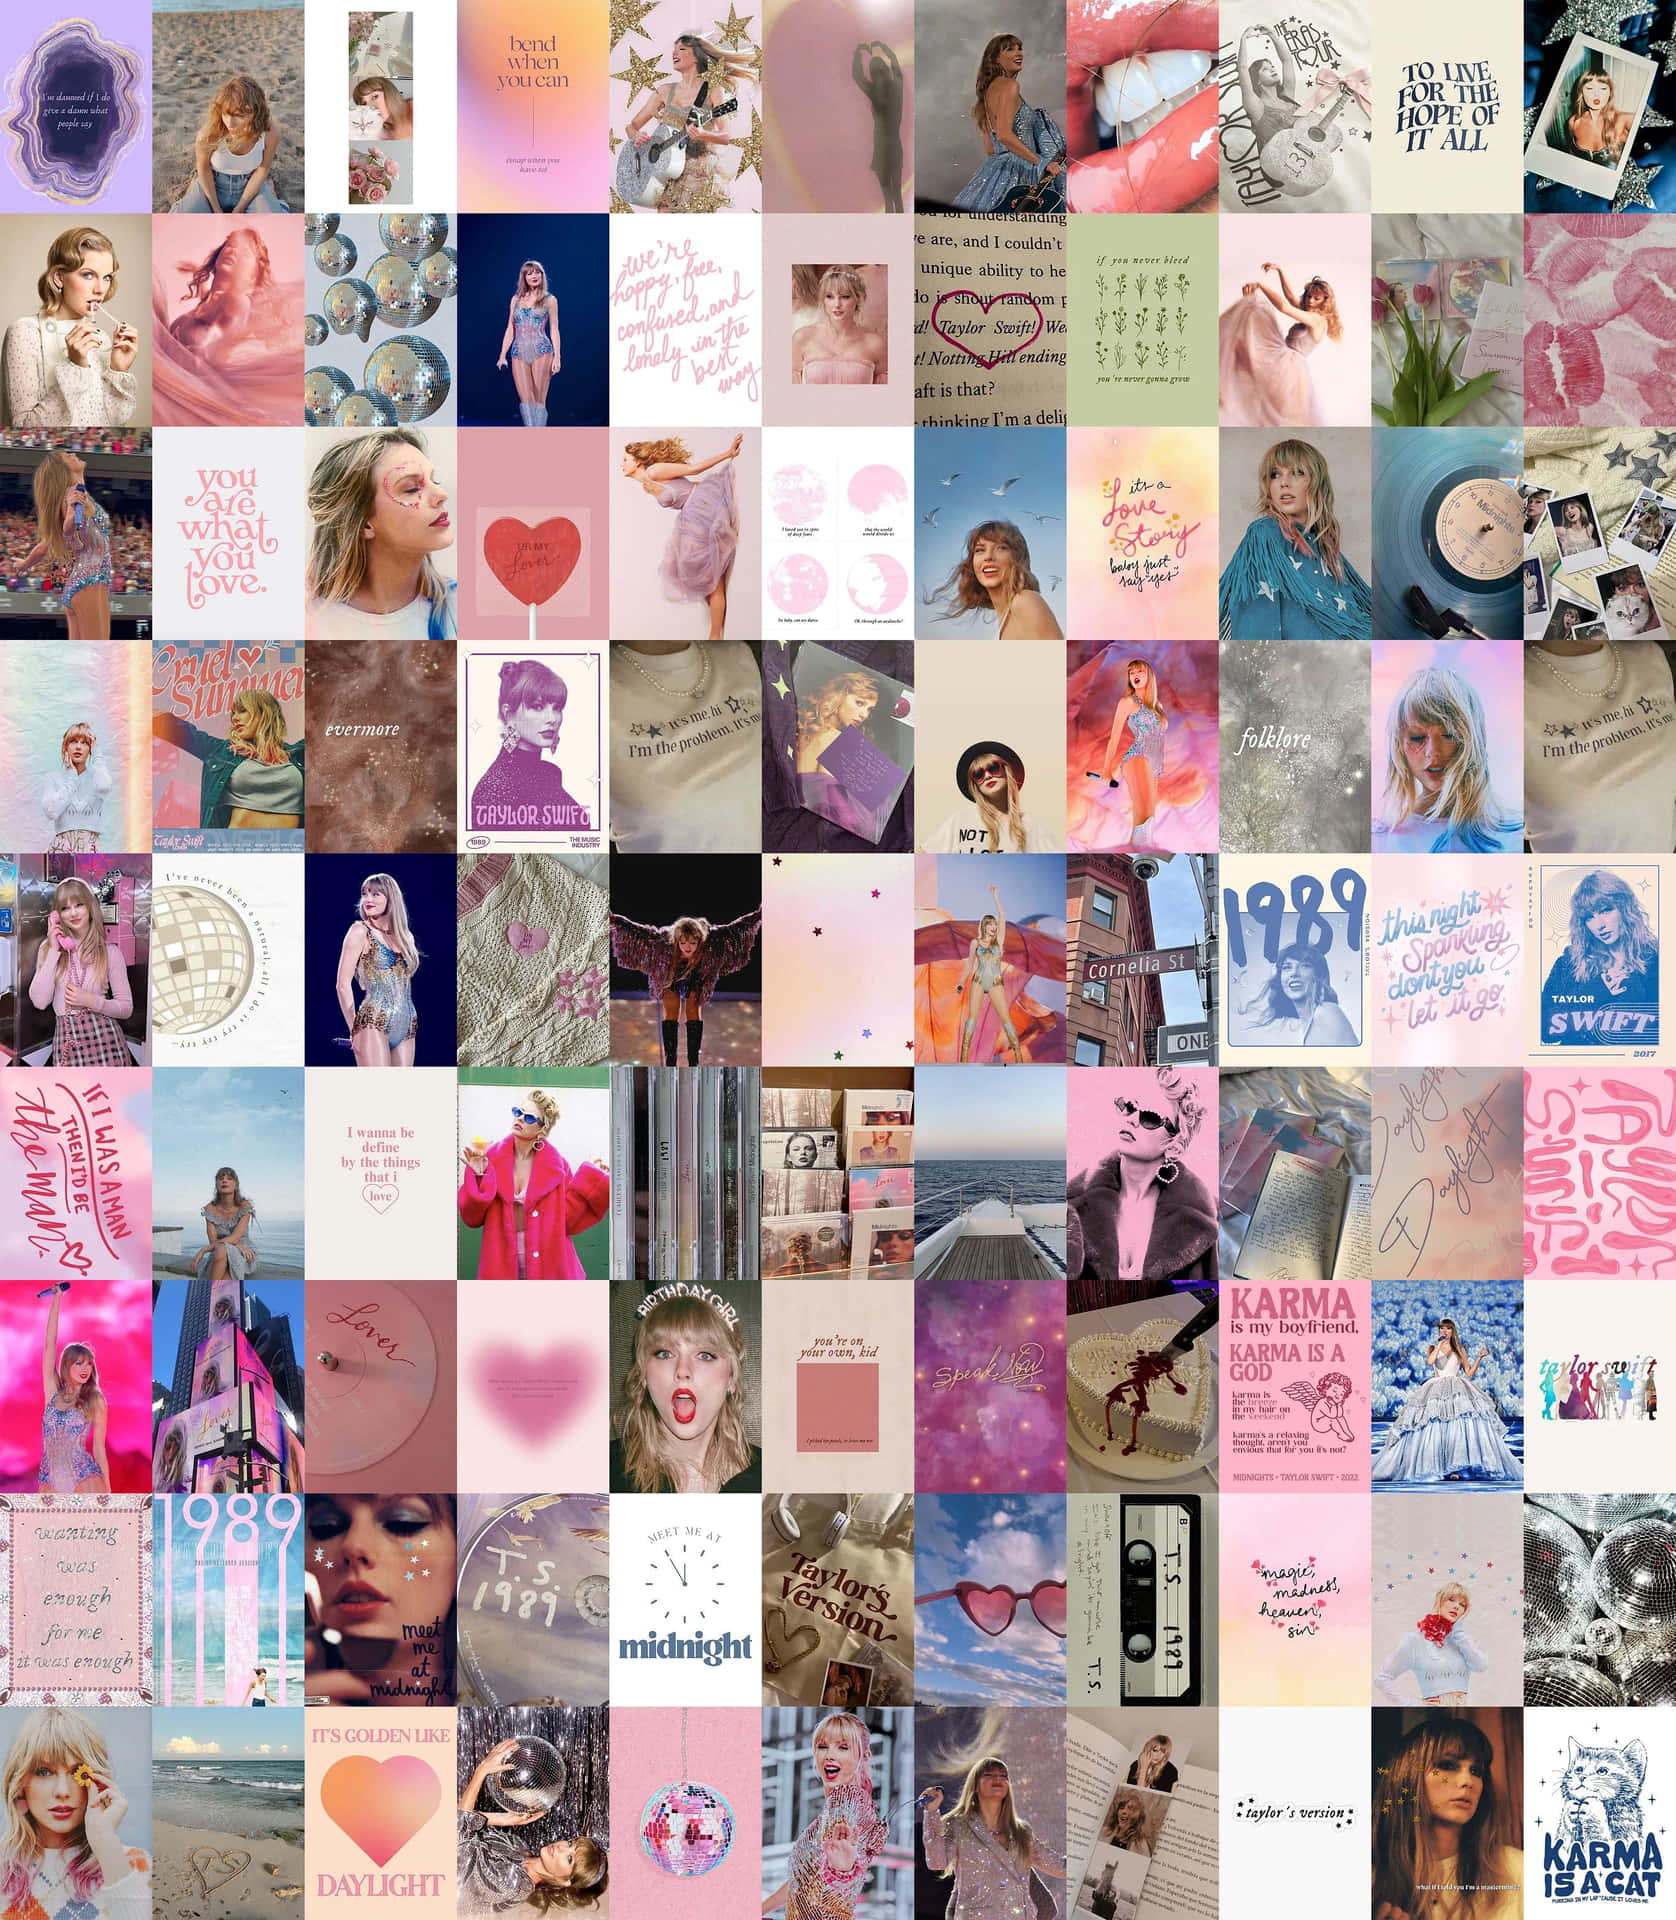 Taylor Swift Aesthetic Collage.jpg Wallpaper